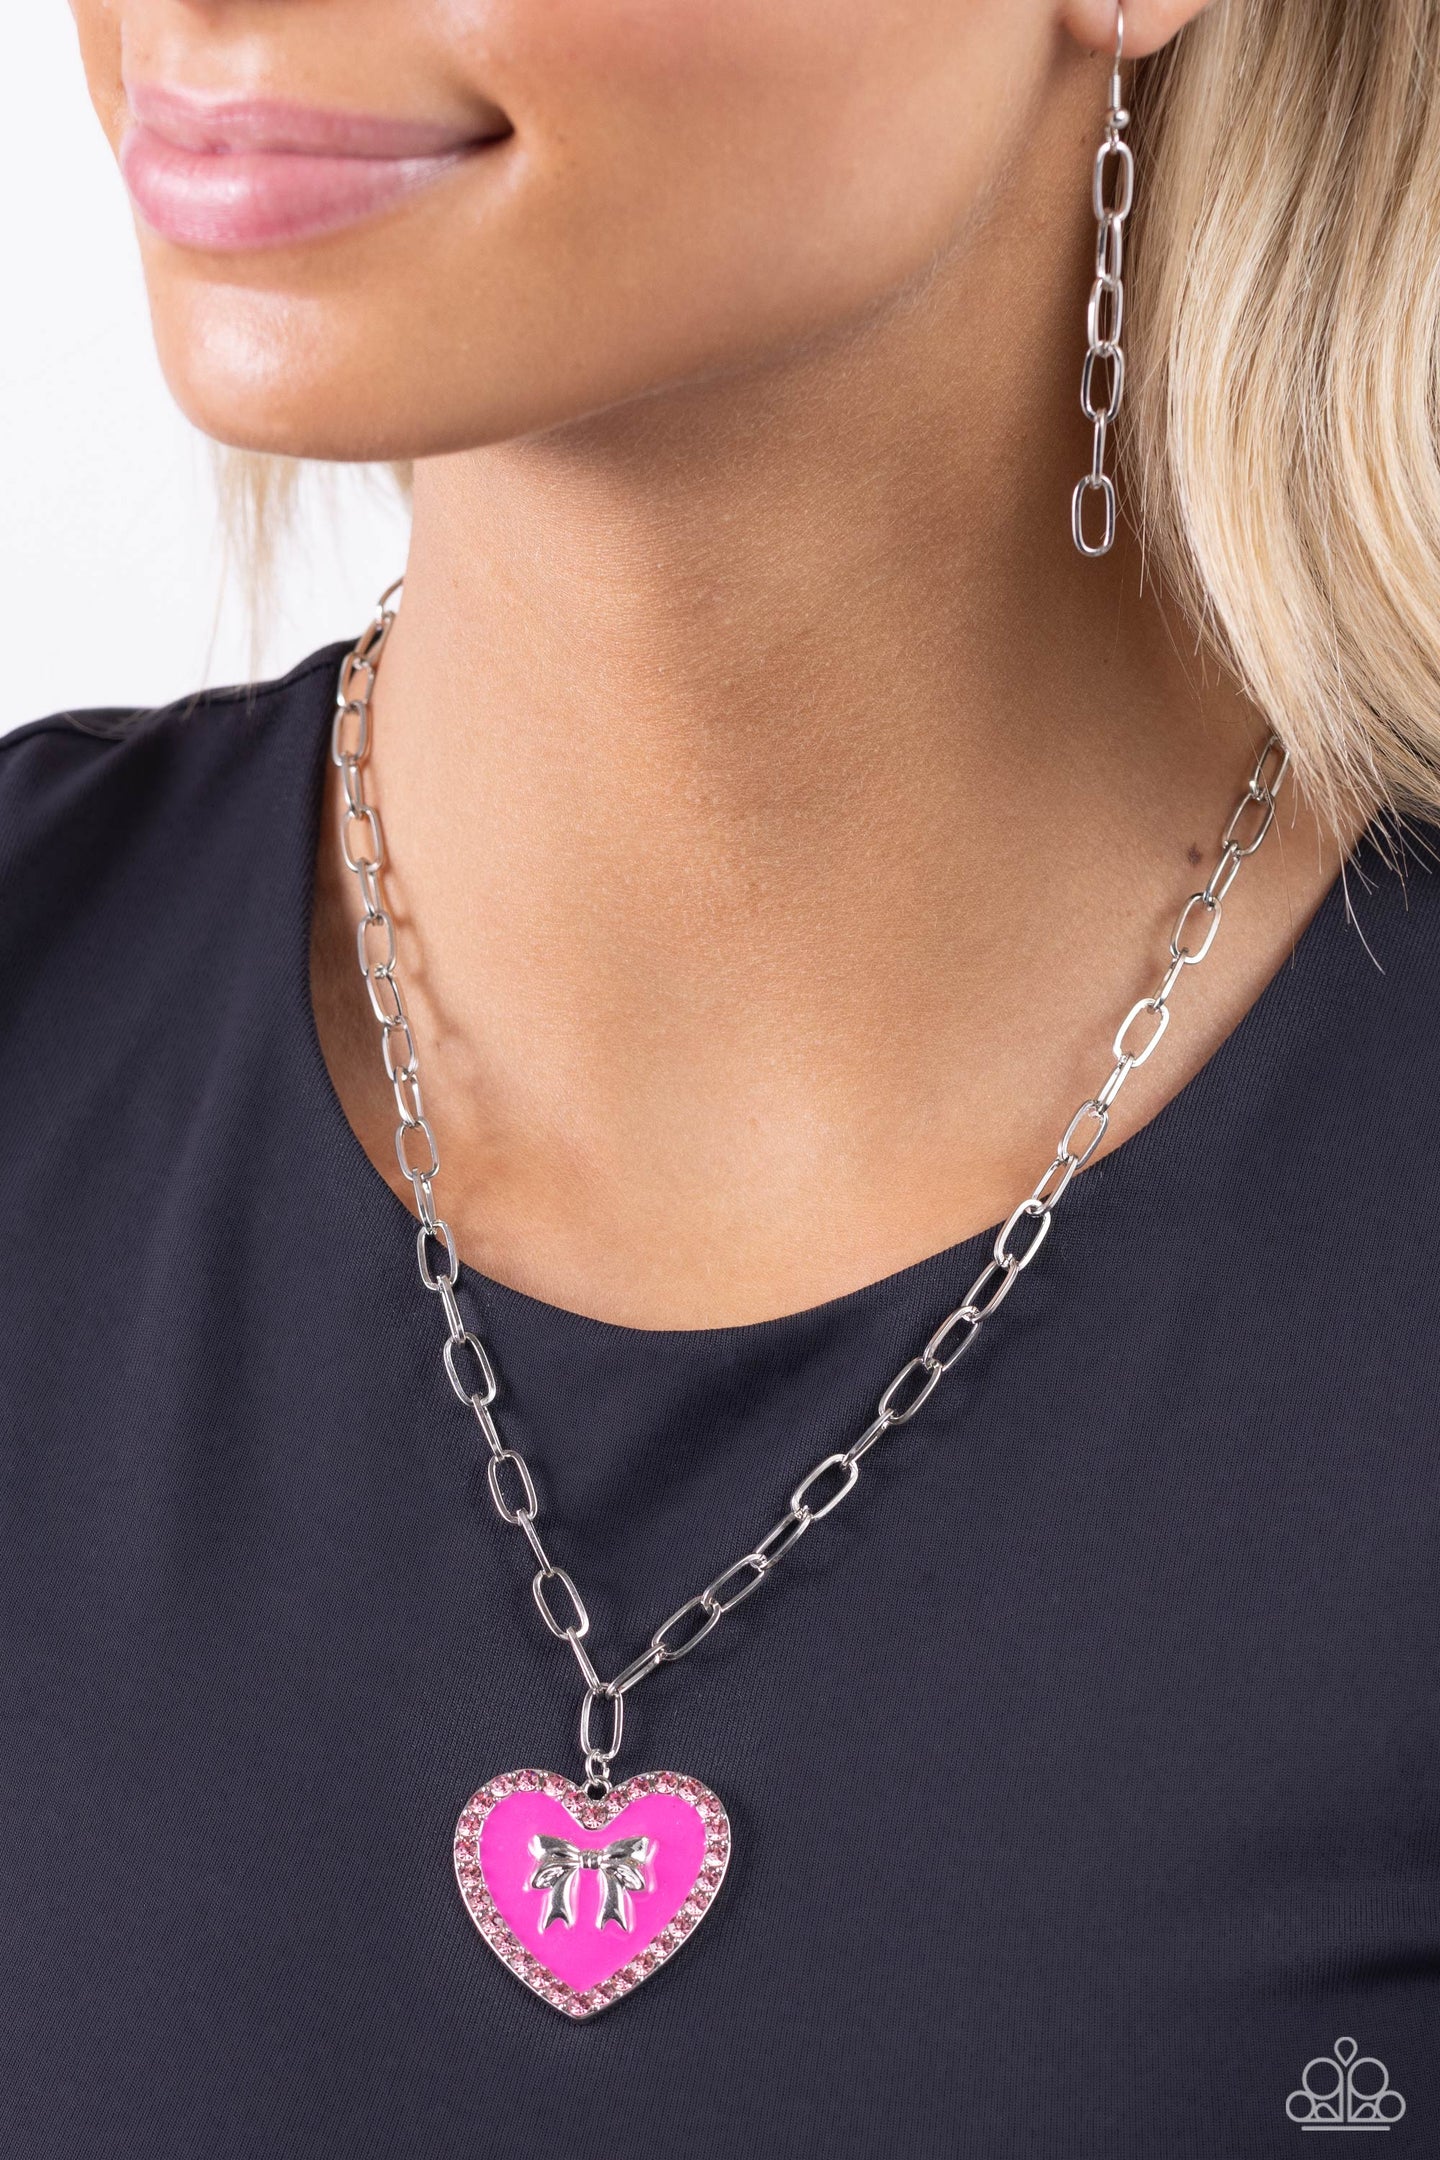 Romantic Gesture - Pink necklace